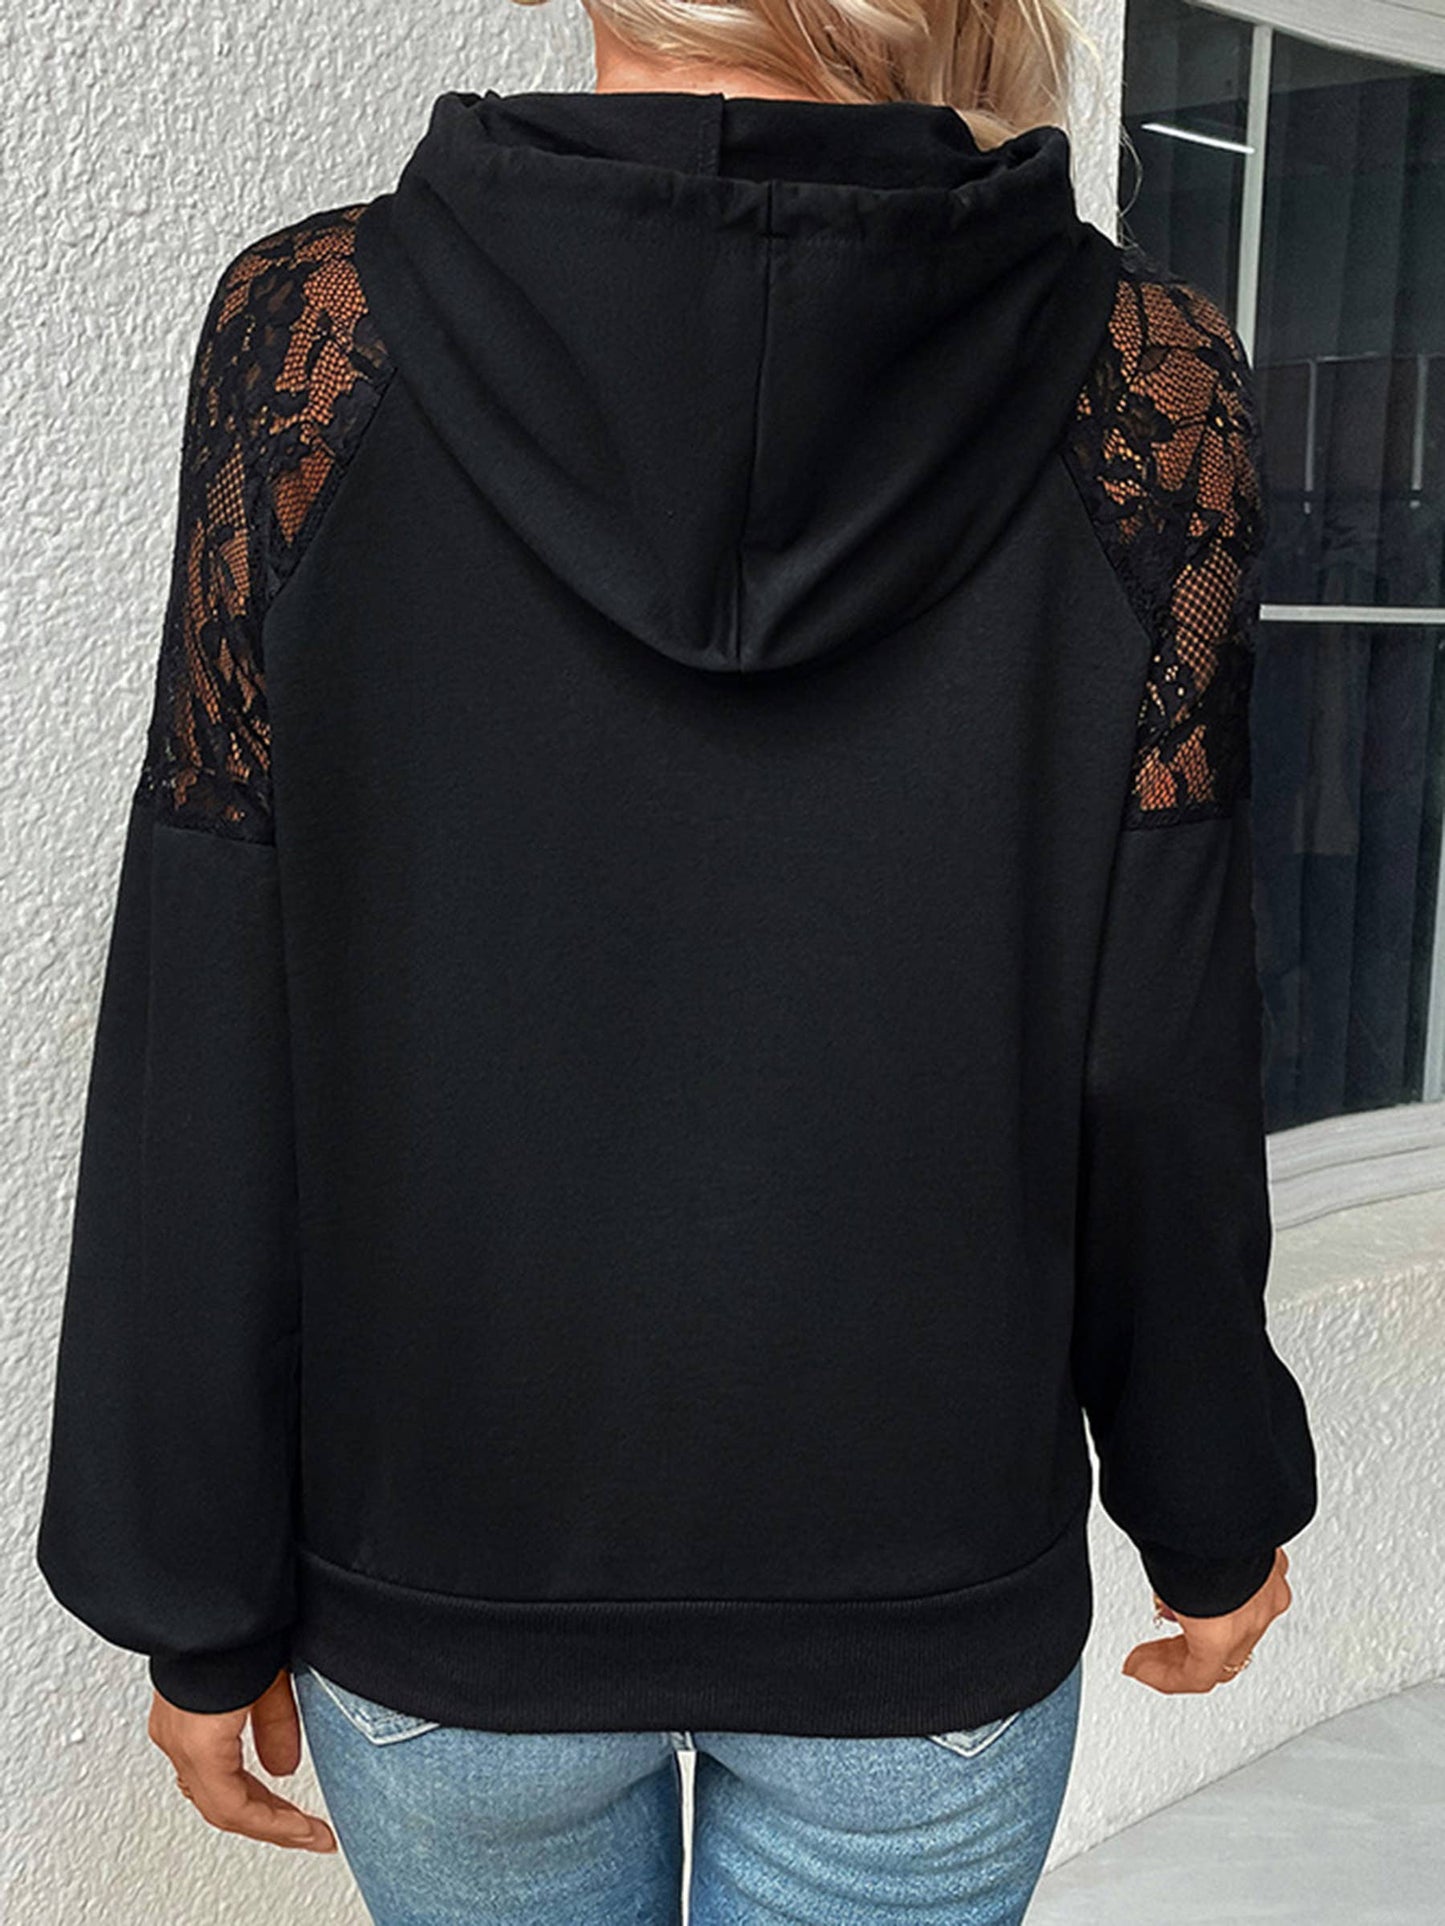 WHS - Long Sleeved Hooded Black Sweater: Black